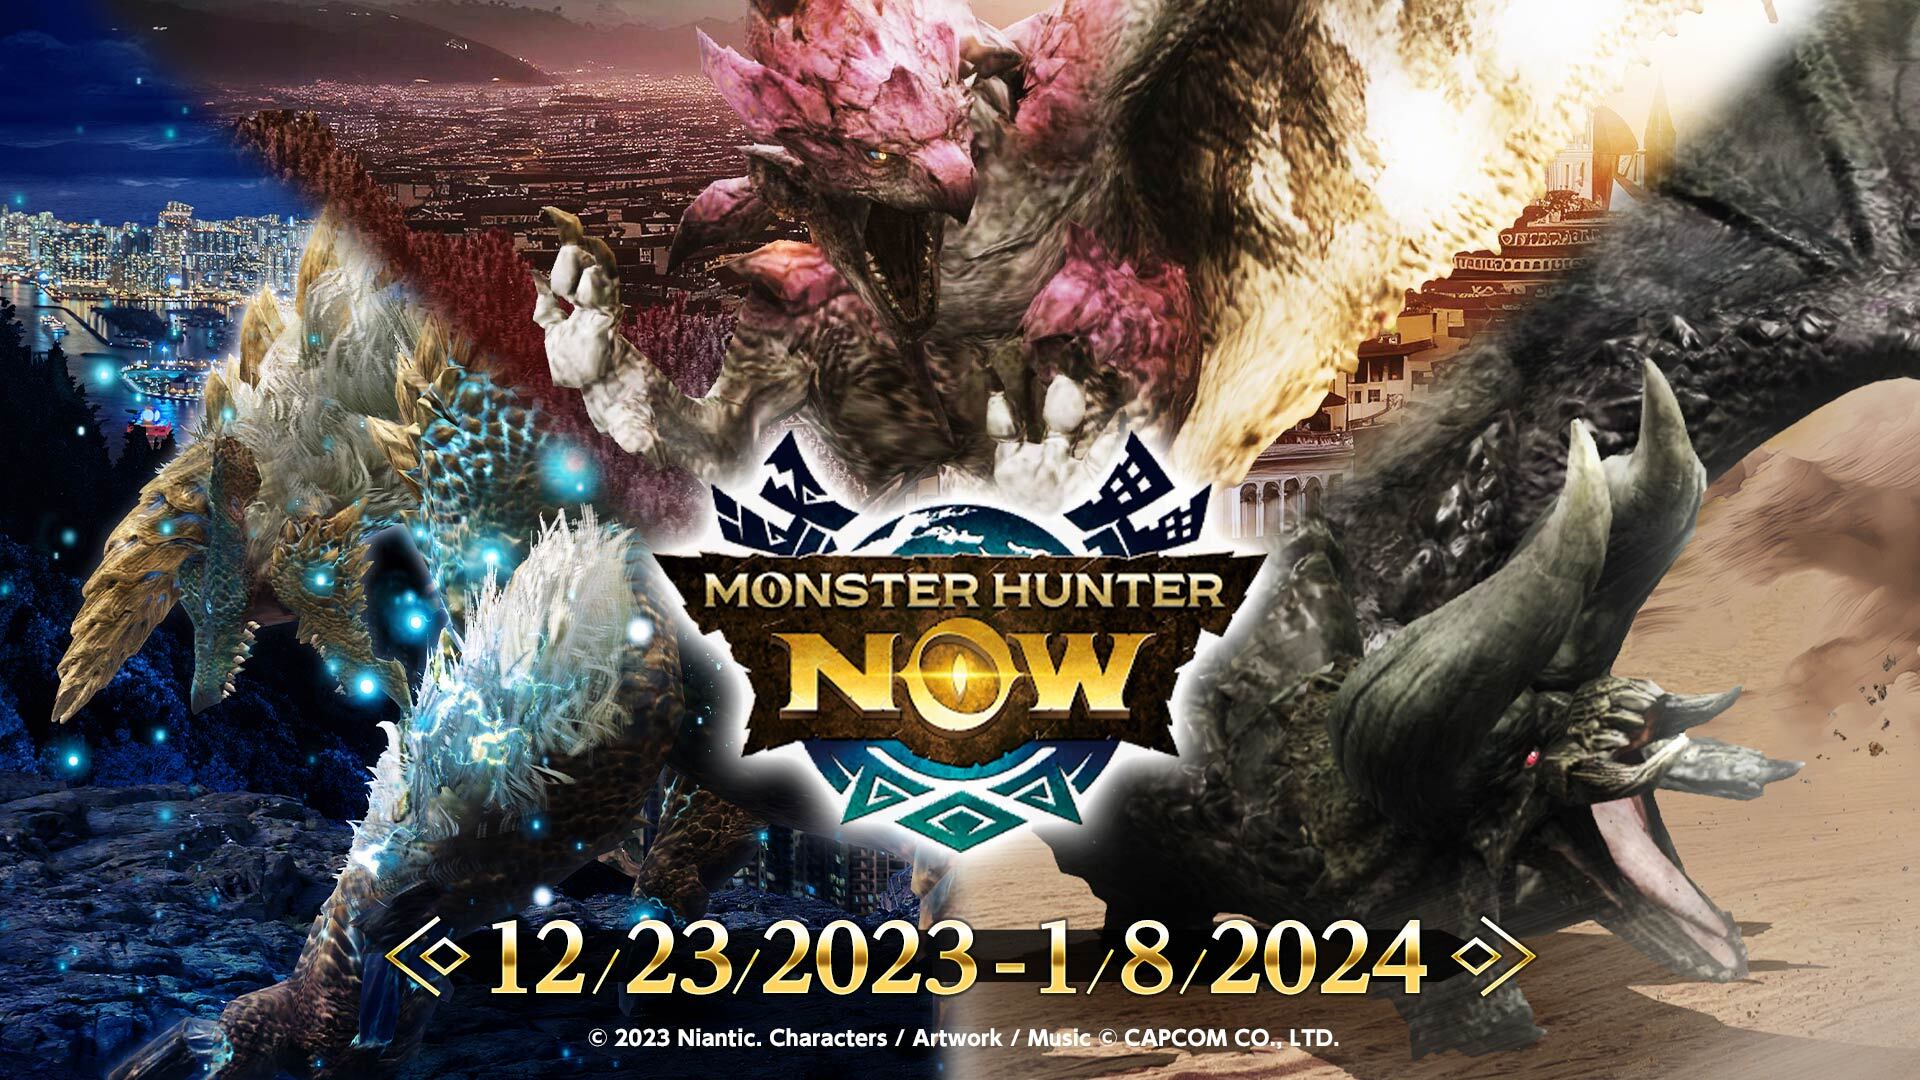 Monster Hunter Now - DIABLOS INVASION EVENT